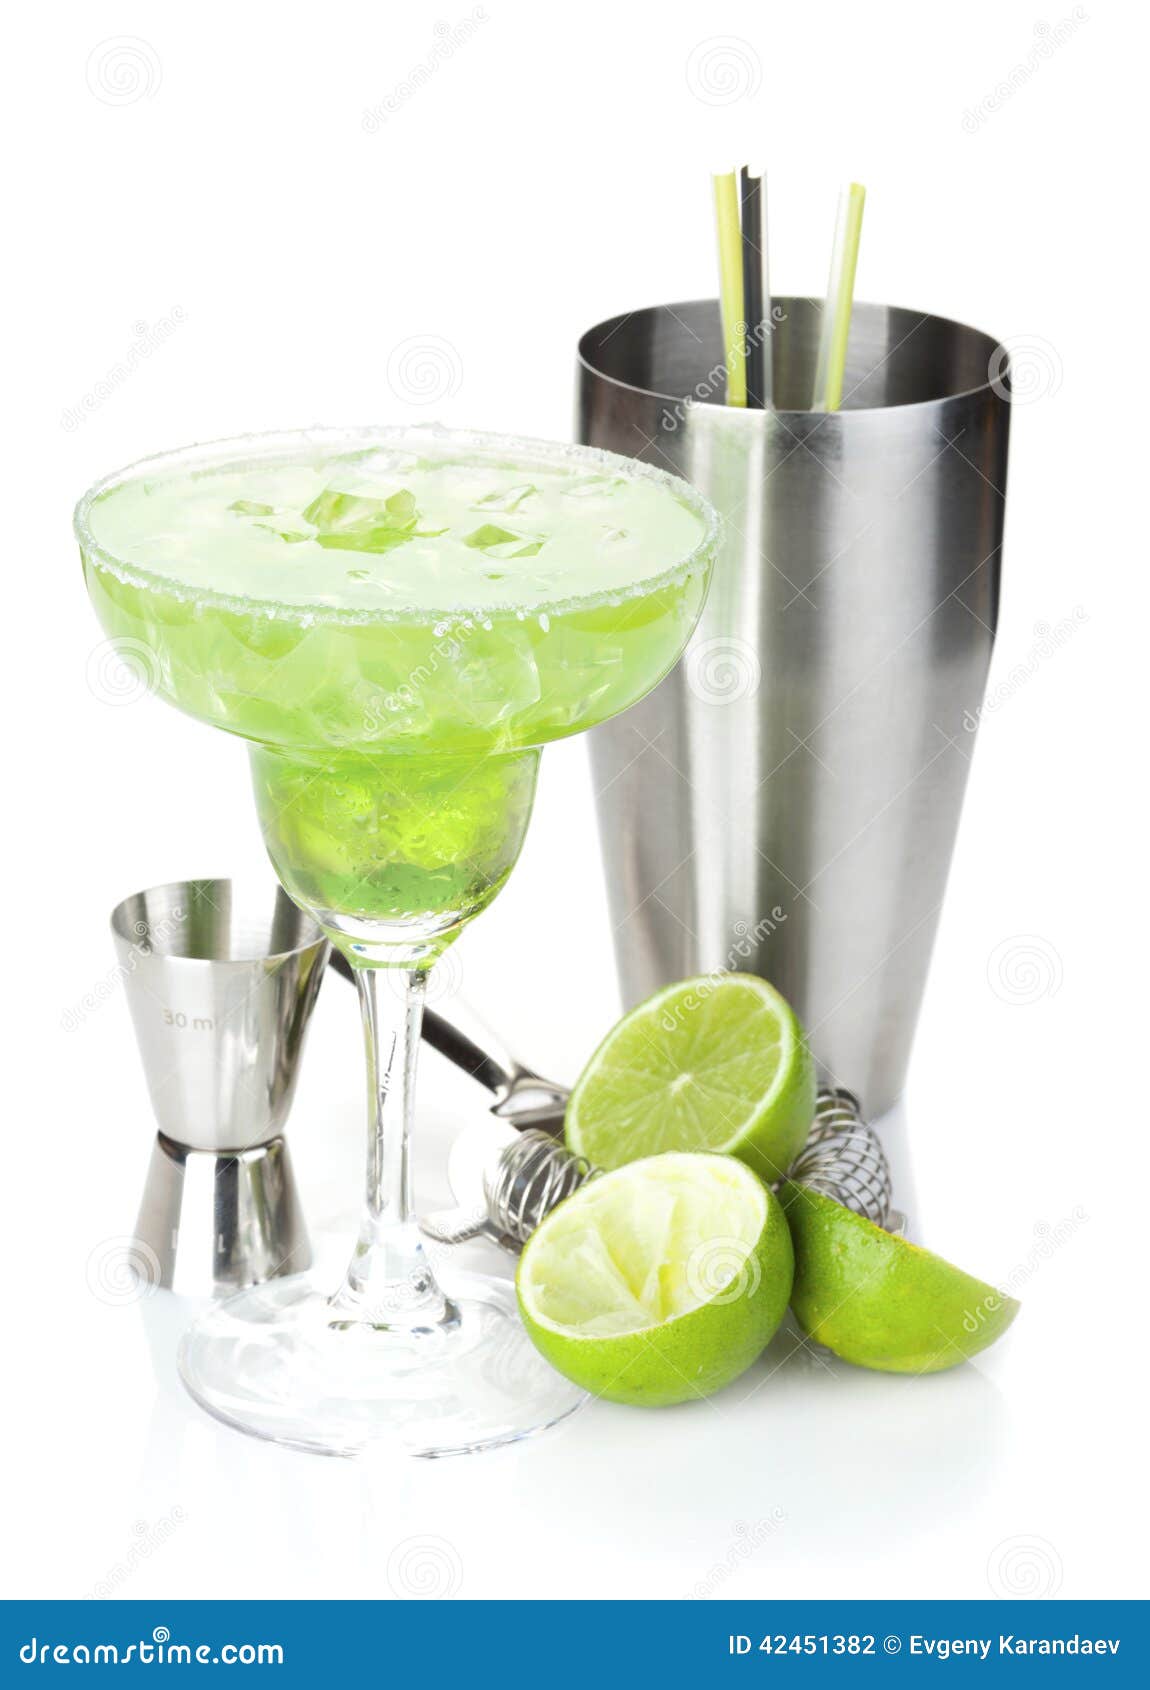 Margarita Drink With Salt On Glass Rim Stock Image ...